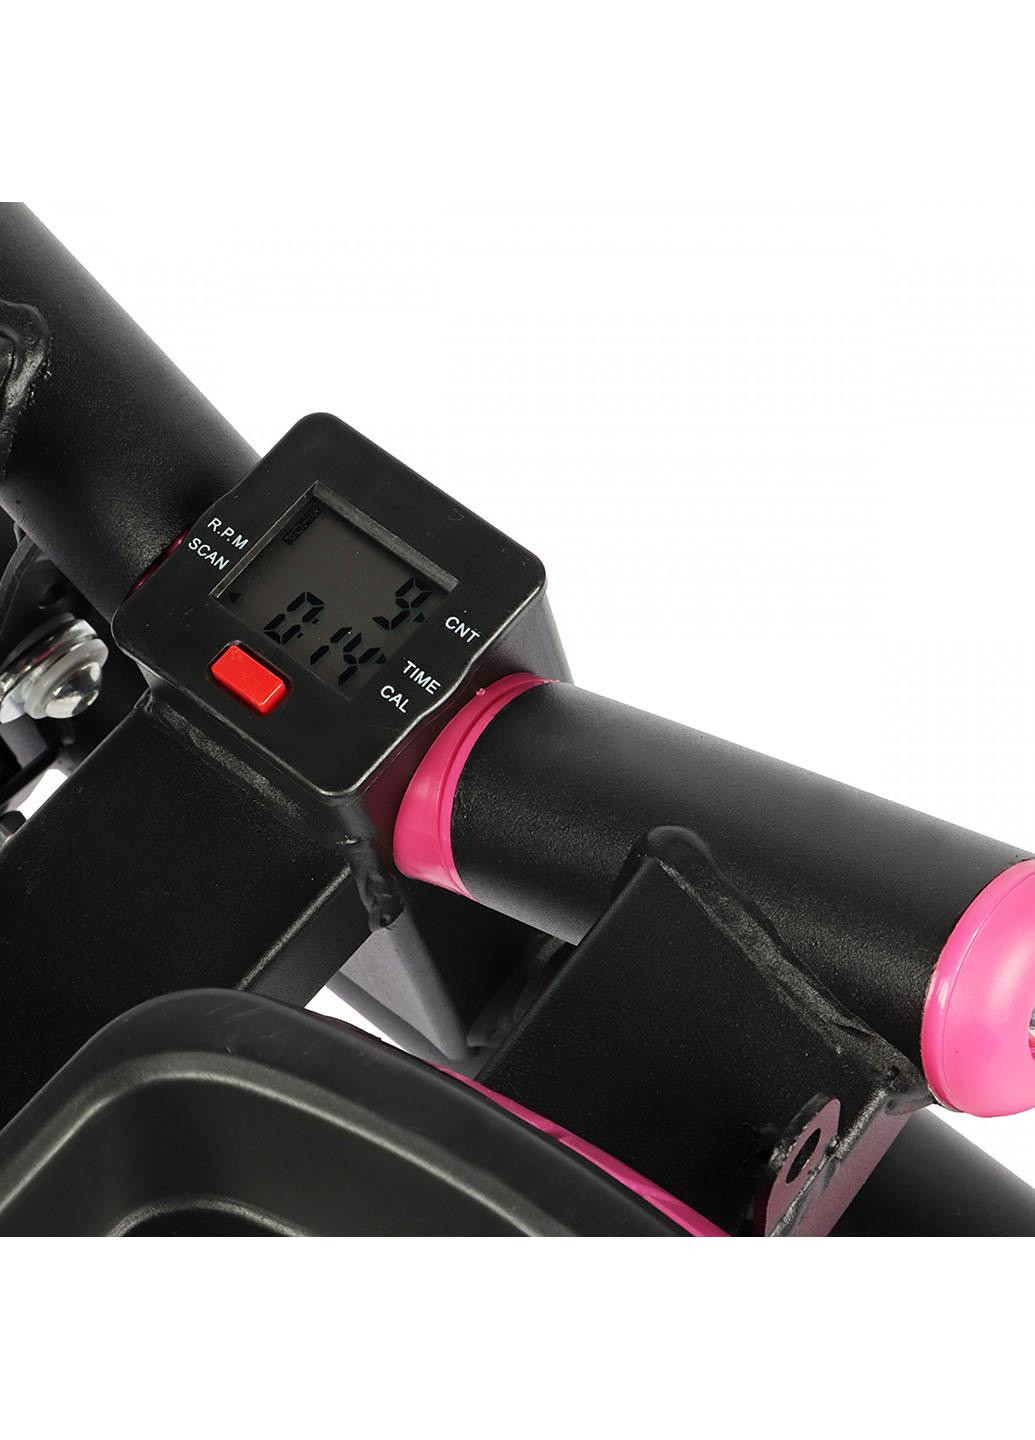 Степпер поворотний (міні-степпер) SV-HK0358 Black/Pink SportVida (258066805)